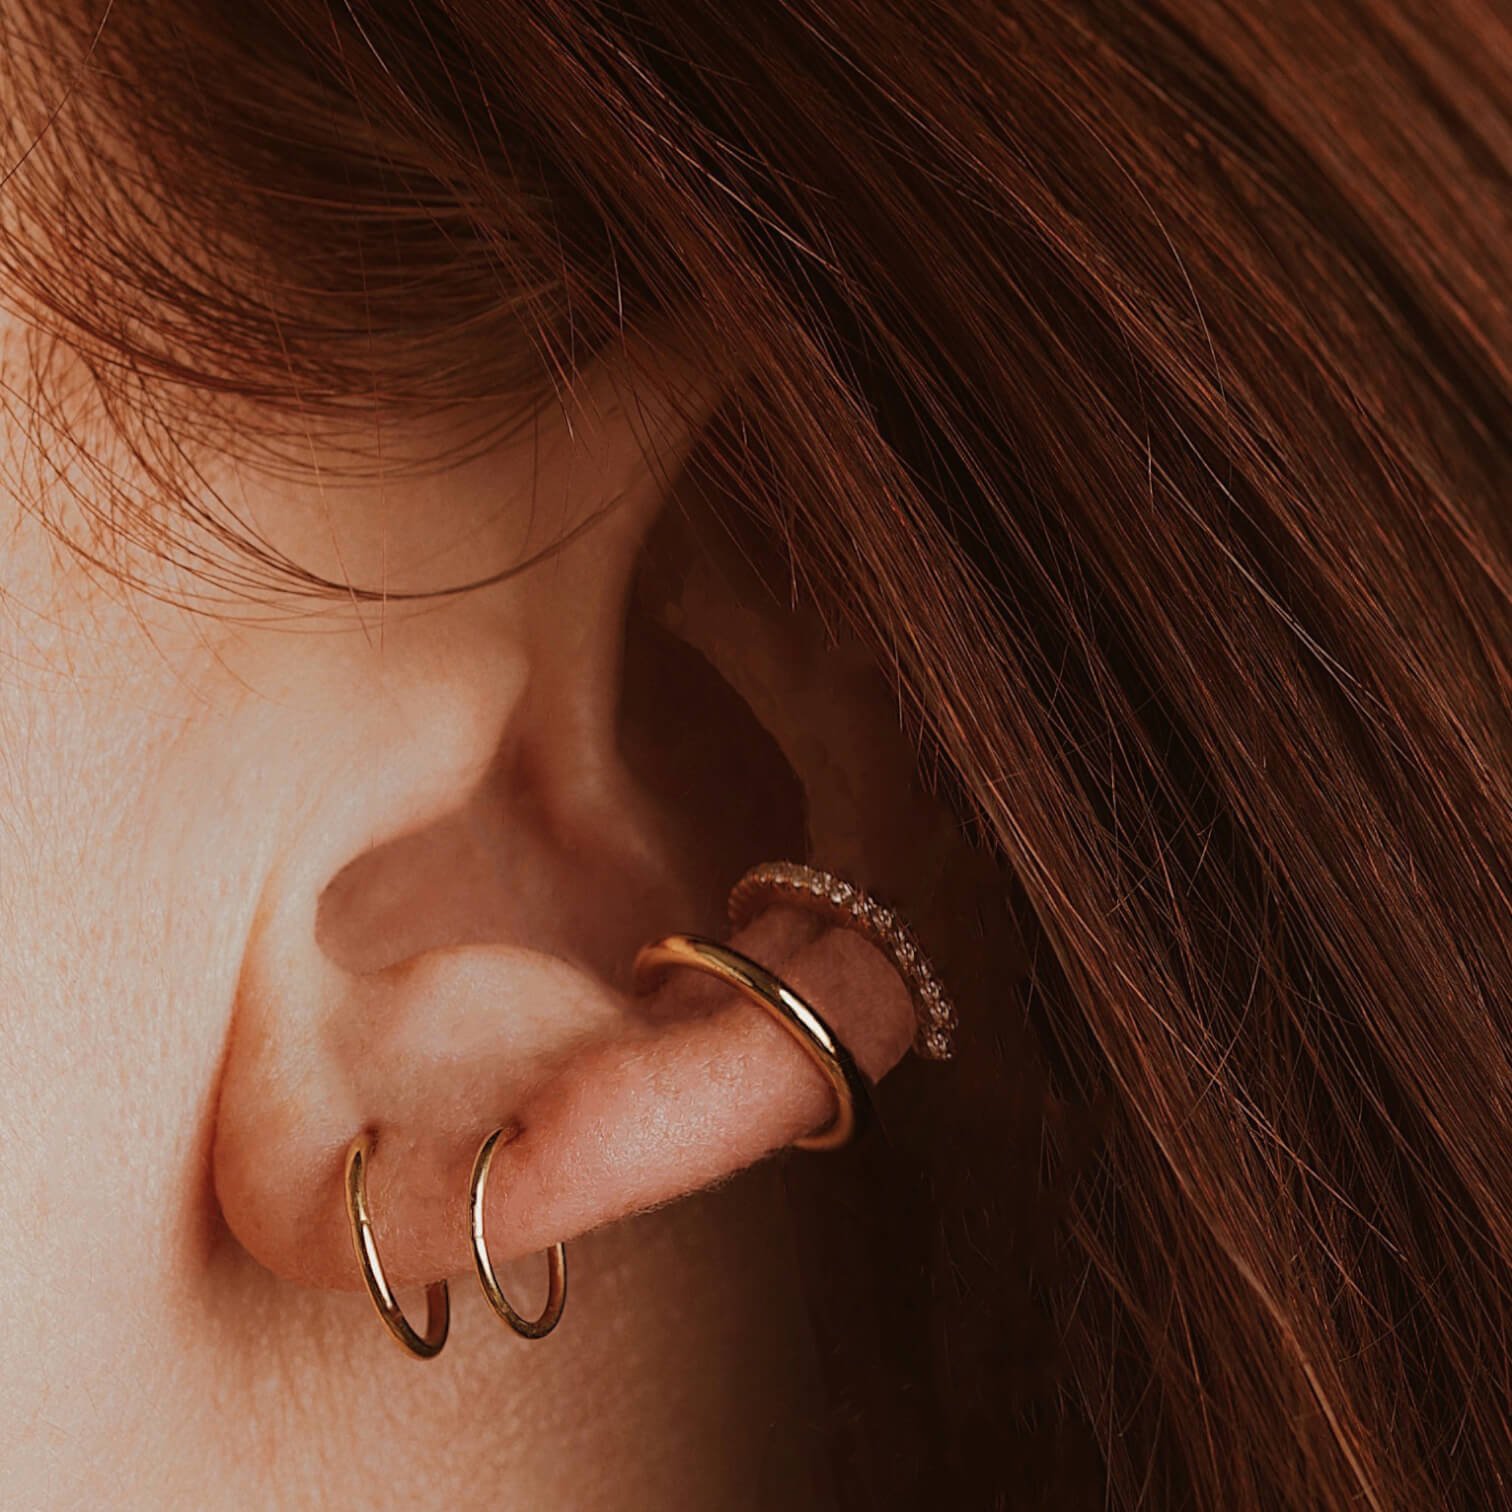 vcmart 16G Nose Rings Hoop Cartilage Earrings-316L Stainless Steel Seamless Septum Ear Helix Piercing Jewelry 18pcs